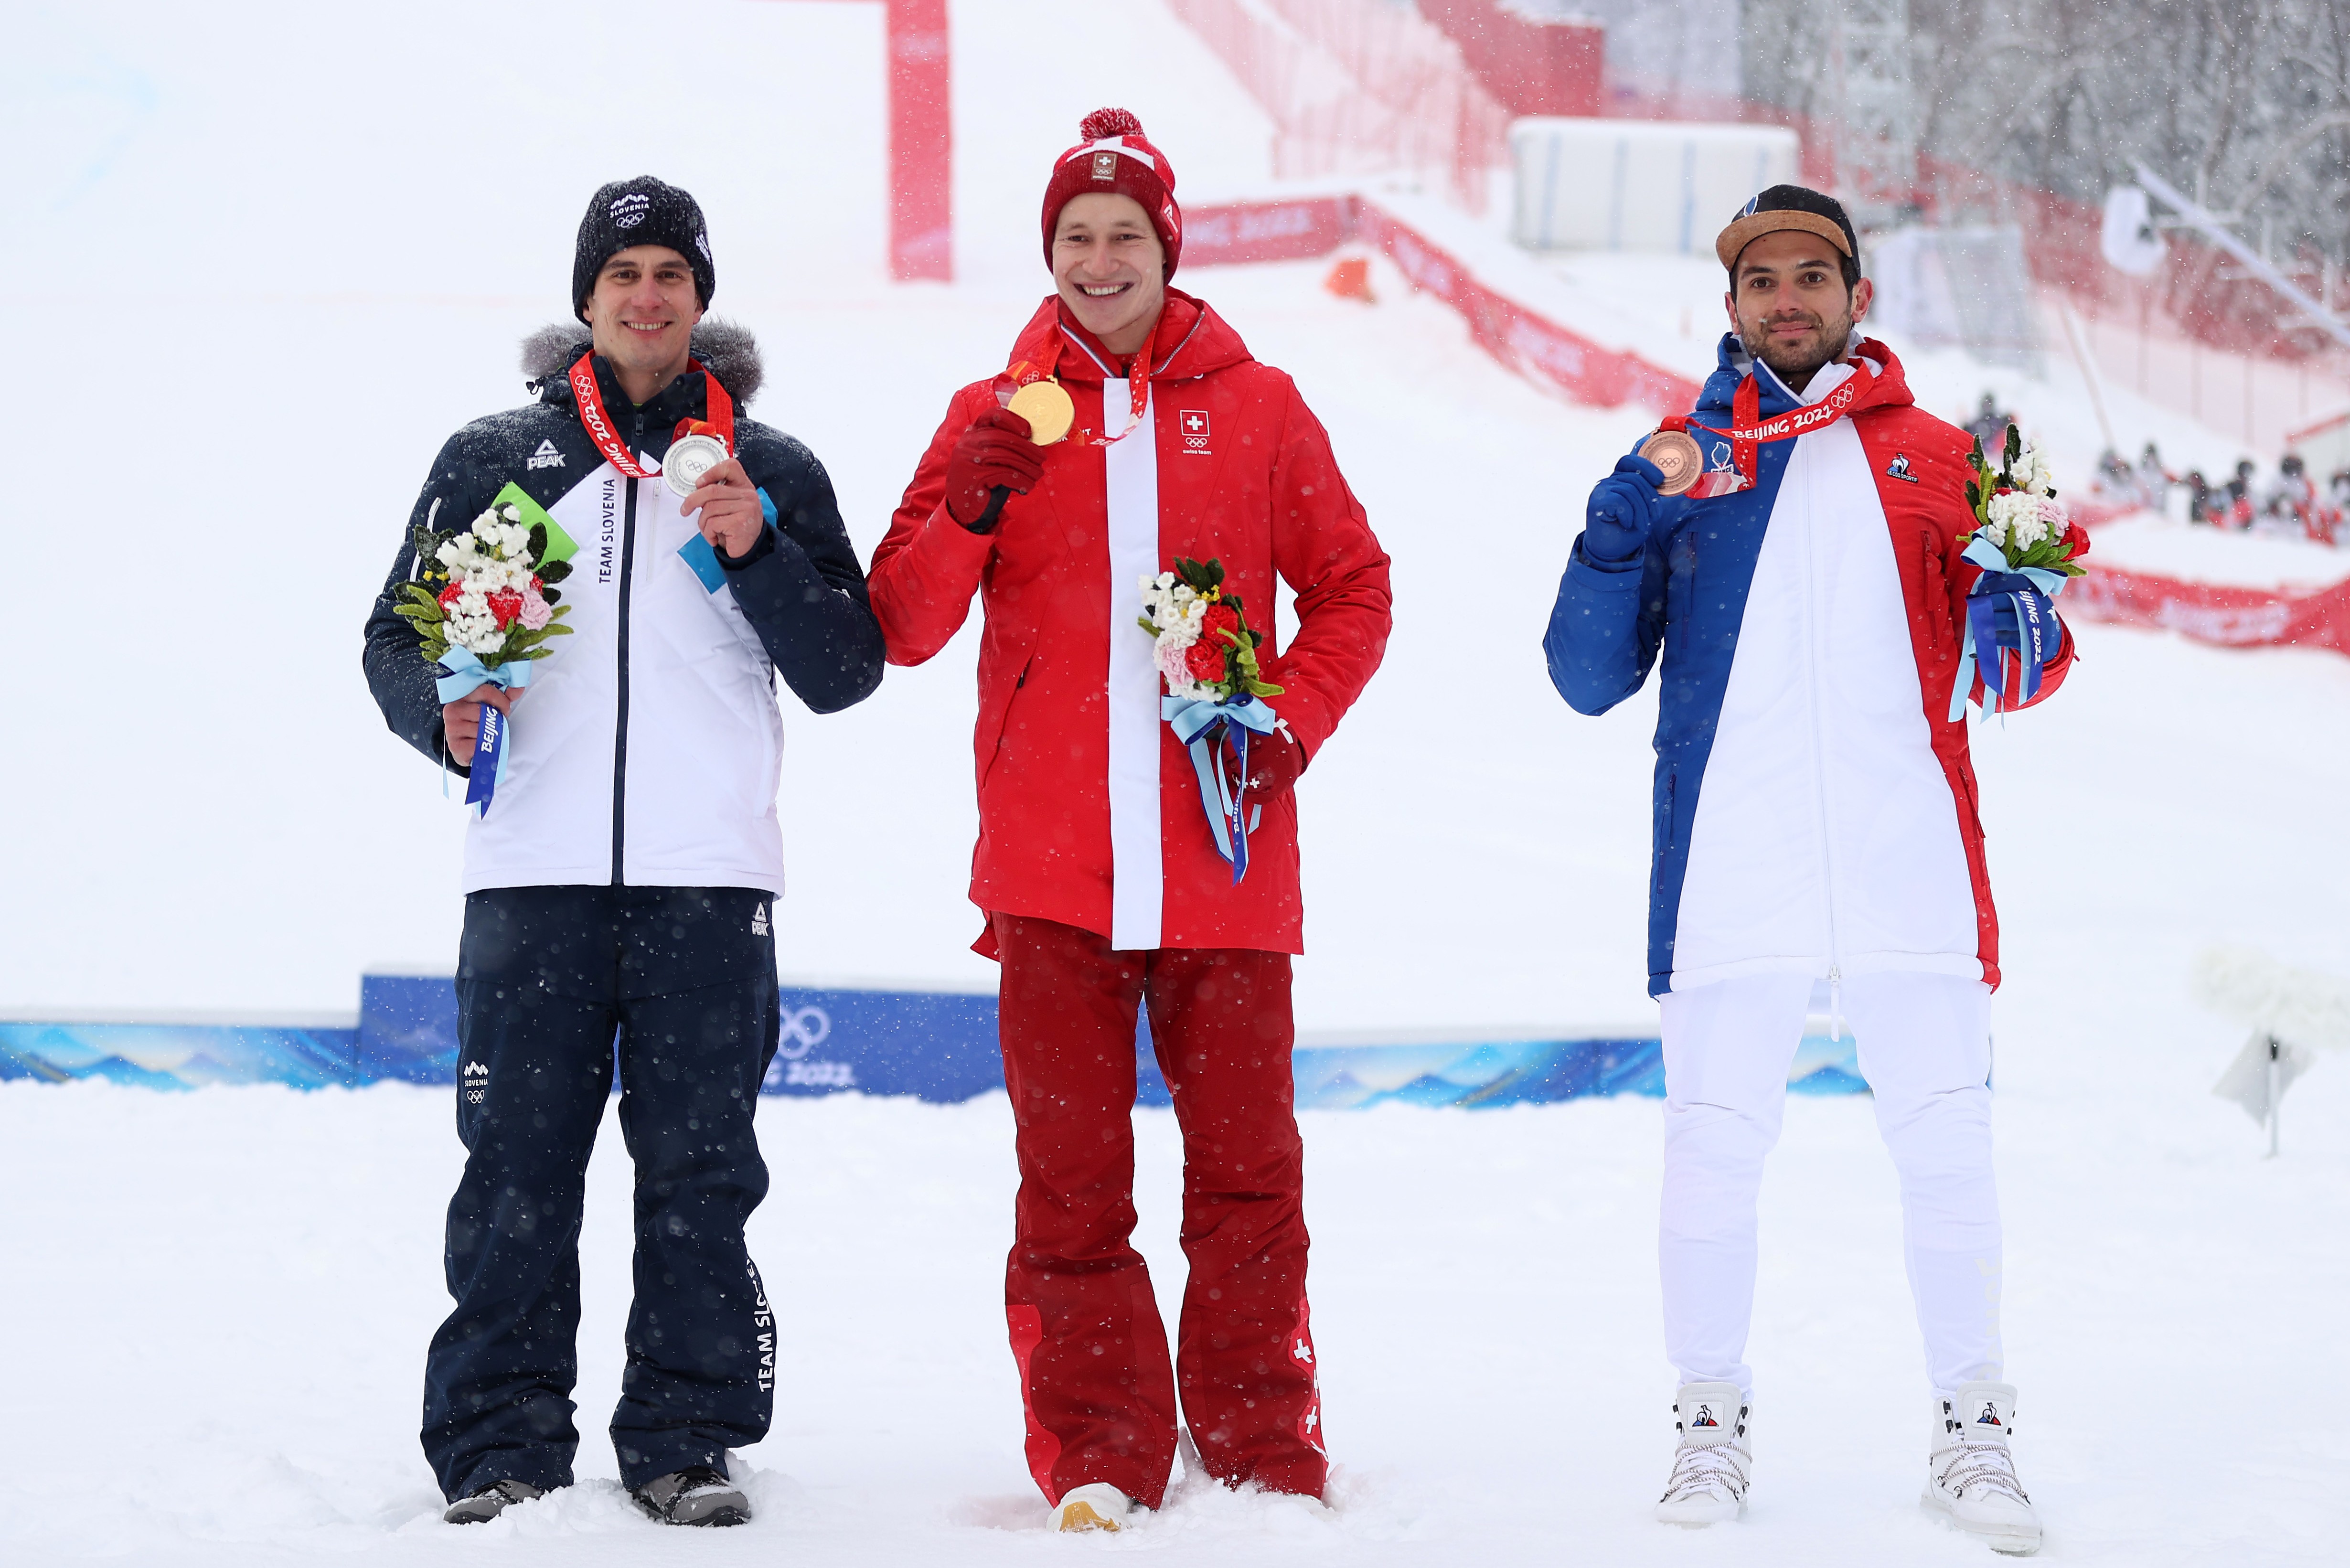 Olympic Men's Alpine Skiing Results 2022: Medal Winners for Giant Slalom